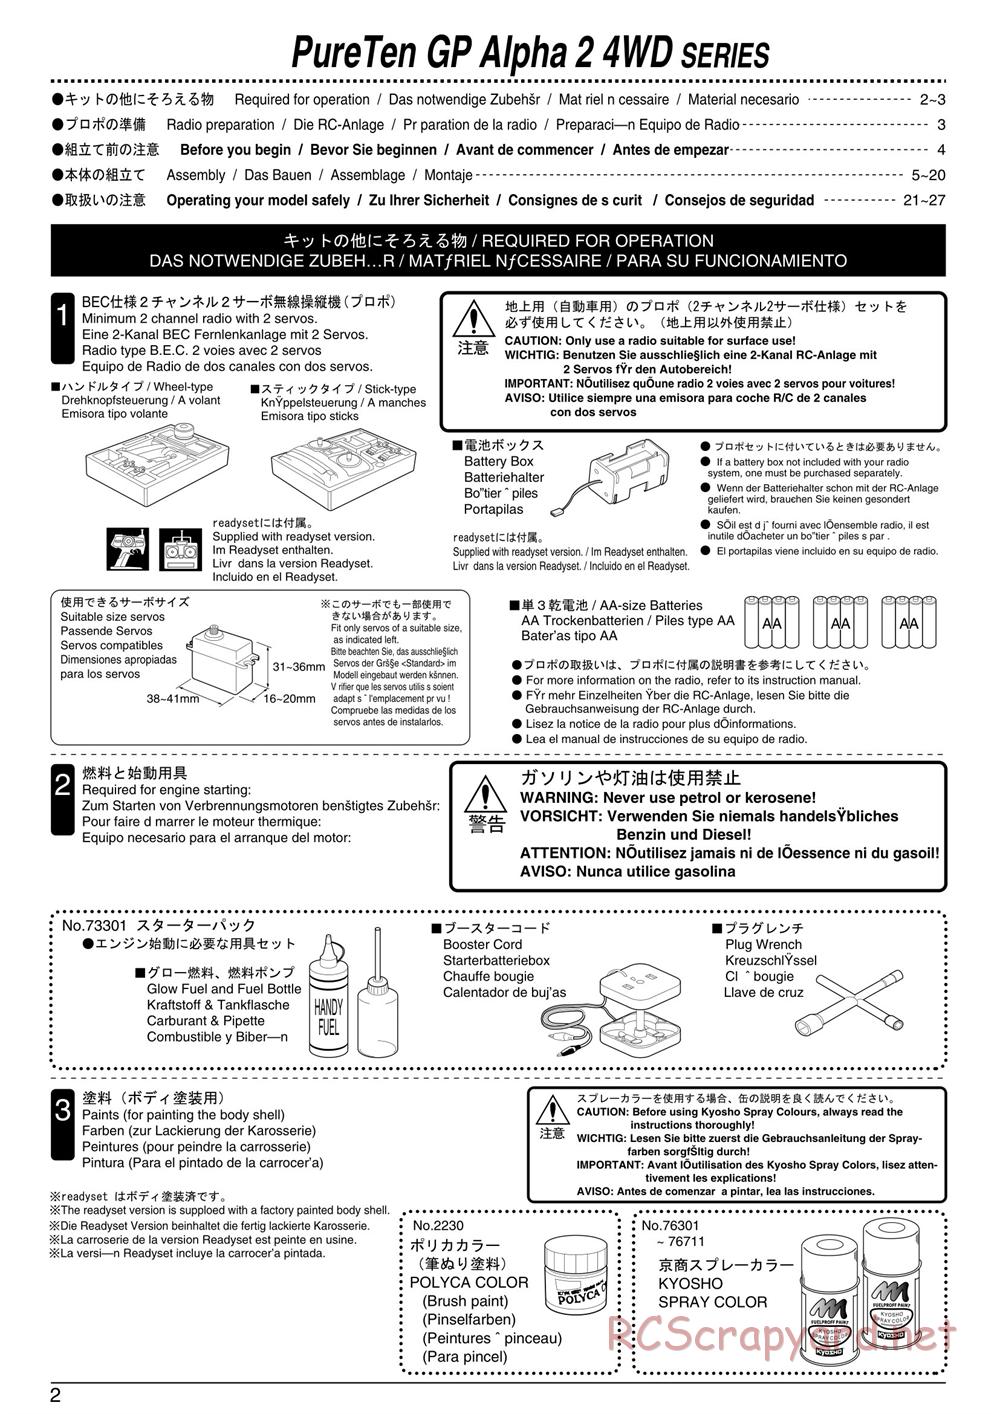 Kyosho - PureTen GP Alpha 2 - Manual - Page 2